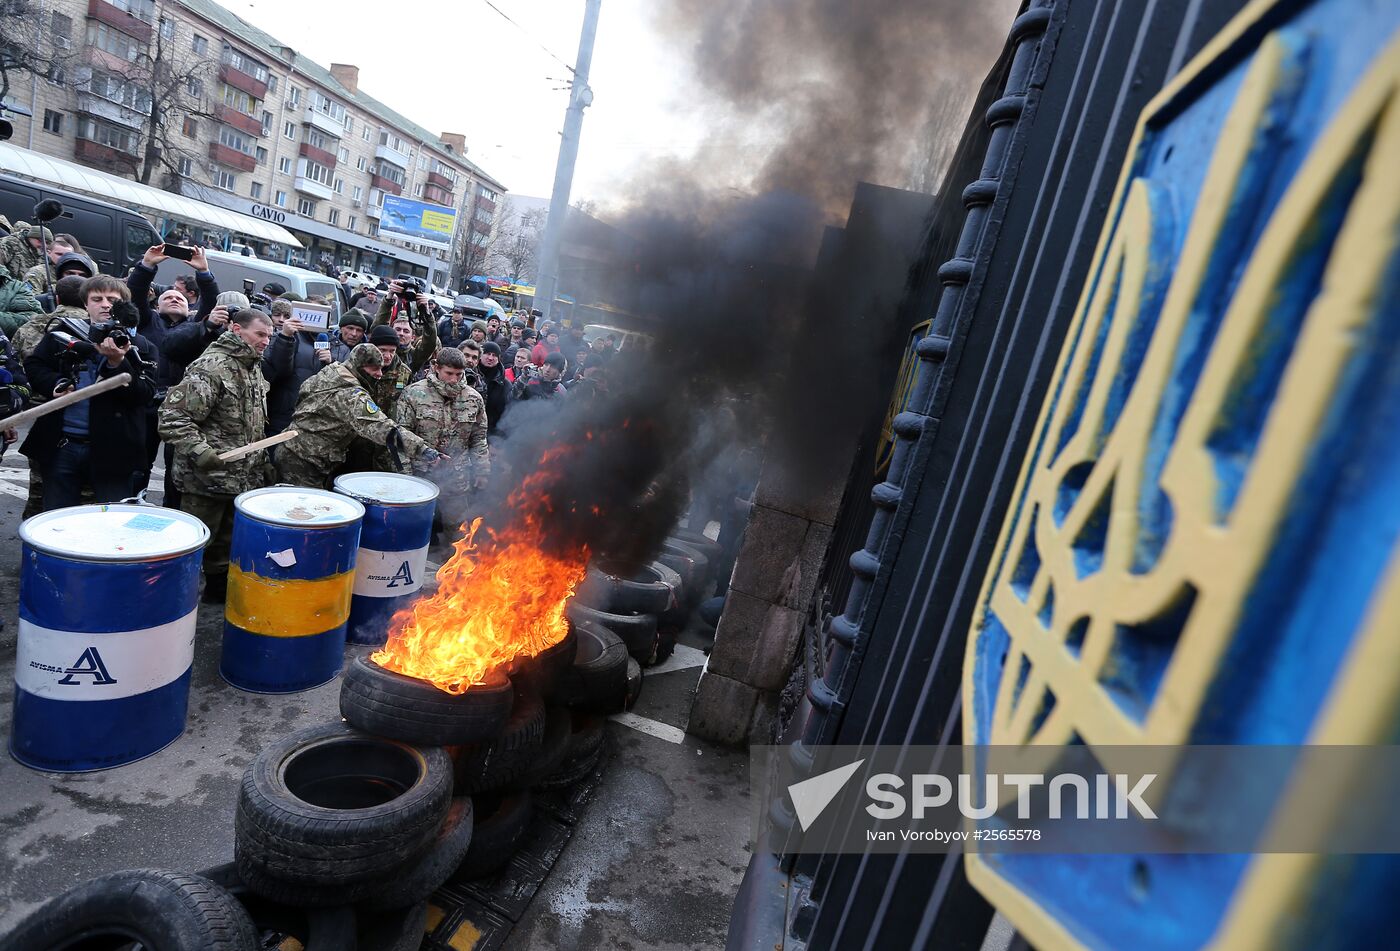 Aidar Battalion's protest action in Kiev